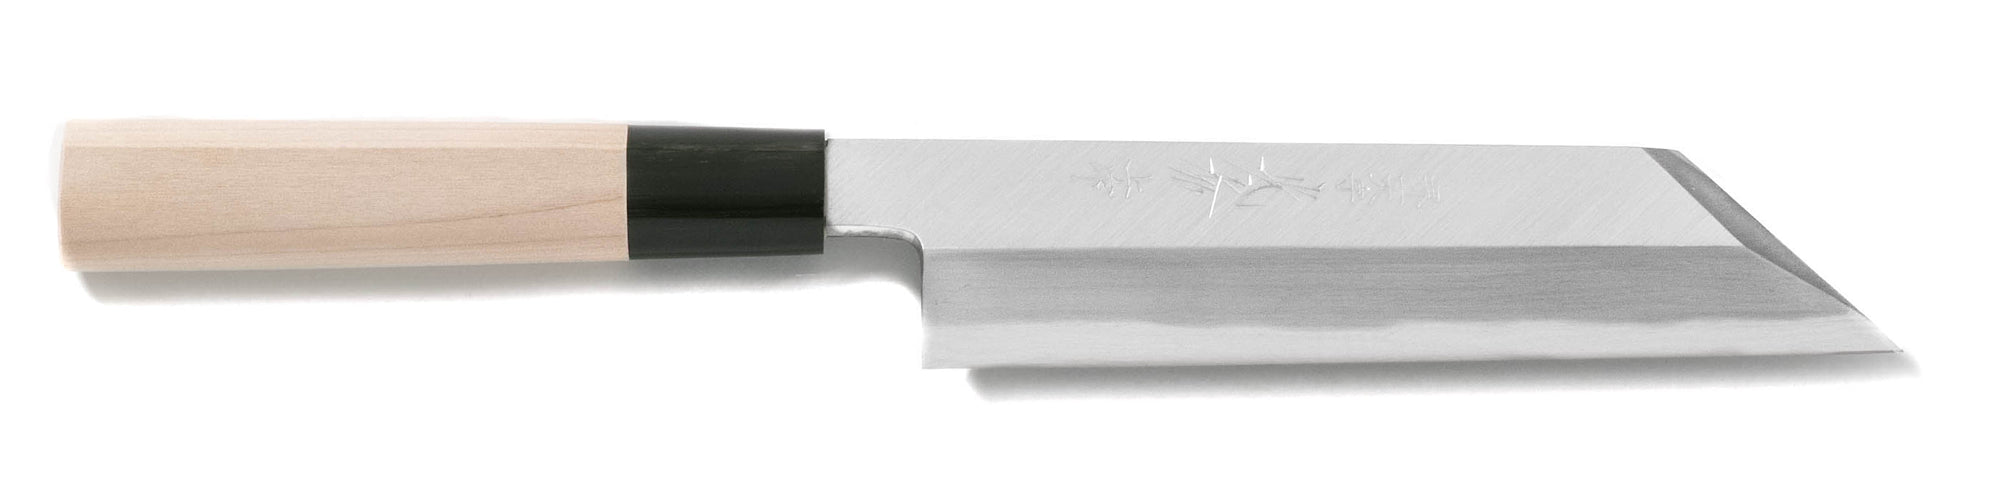 Couteau blanc kasumi kasumi 180 mm